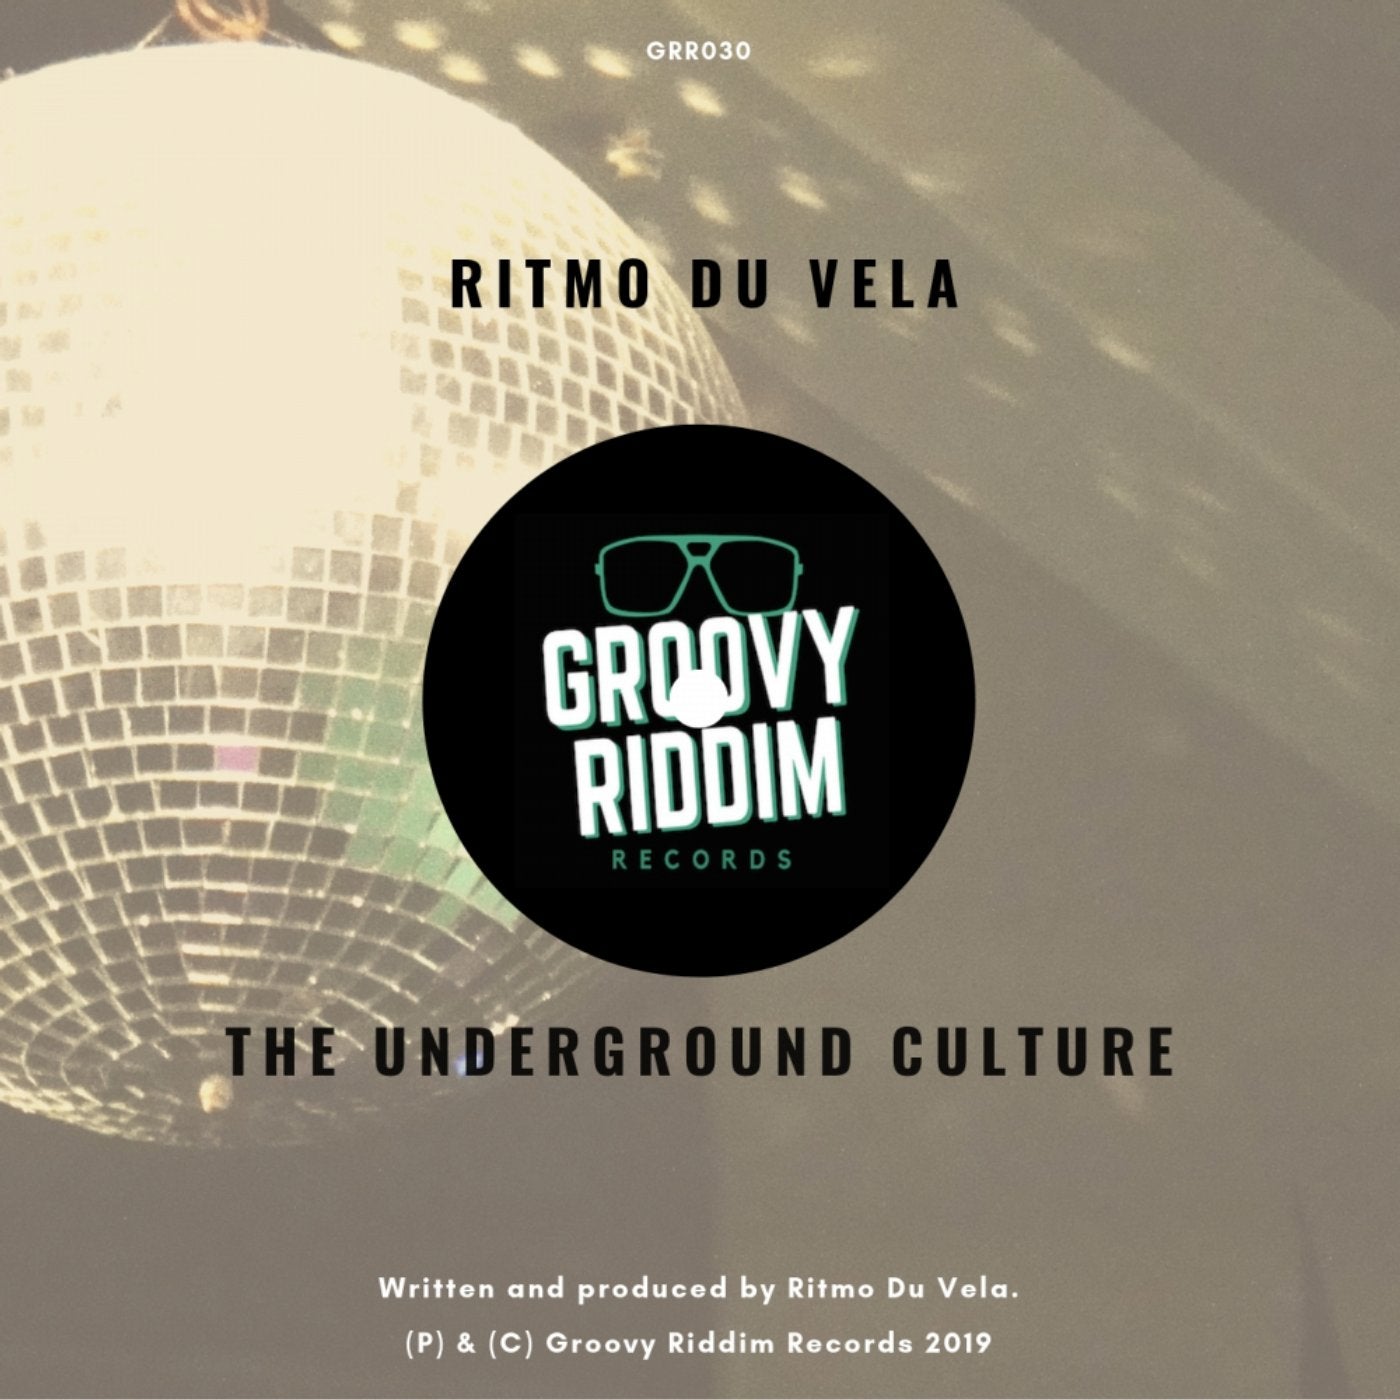 The Underground Culture